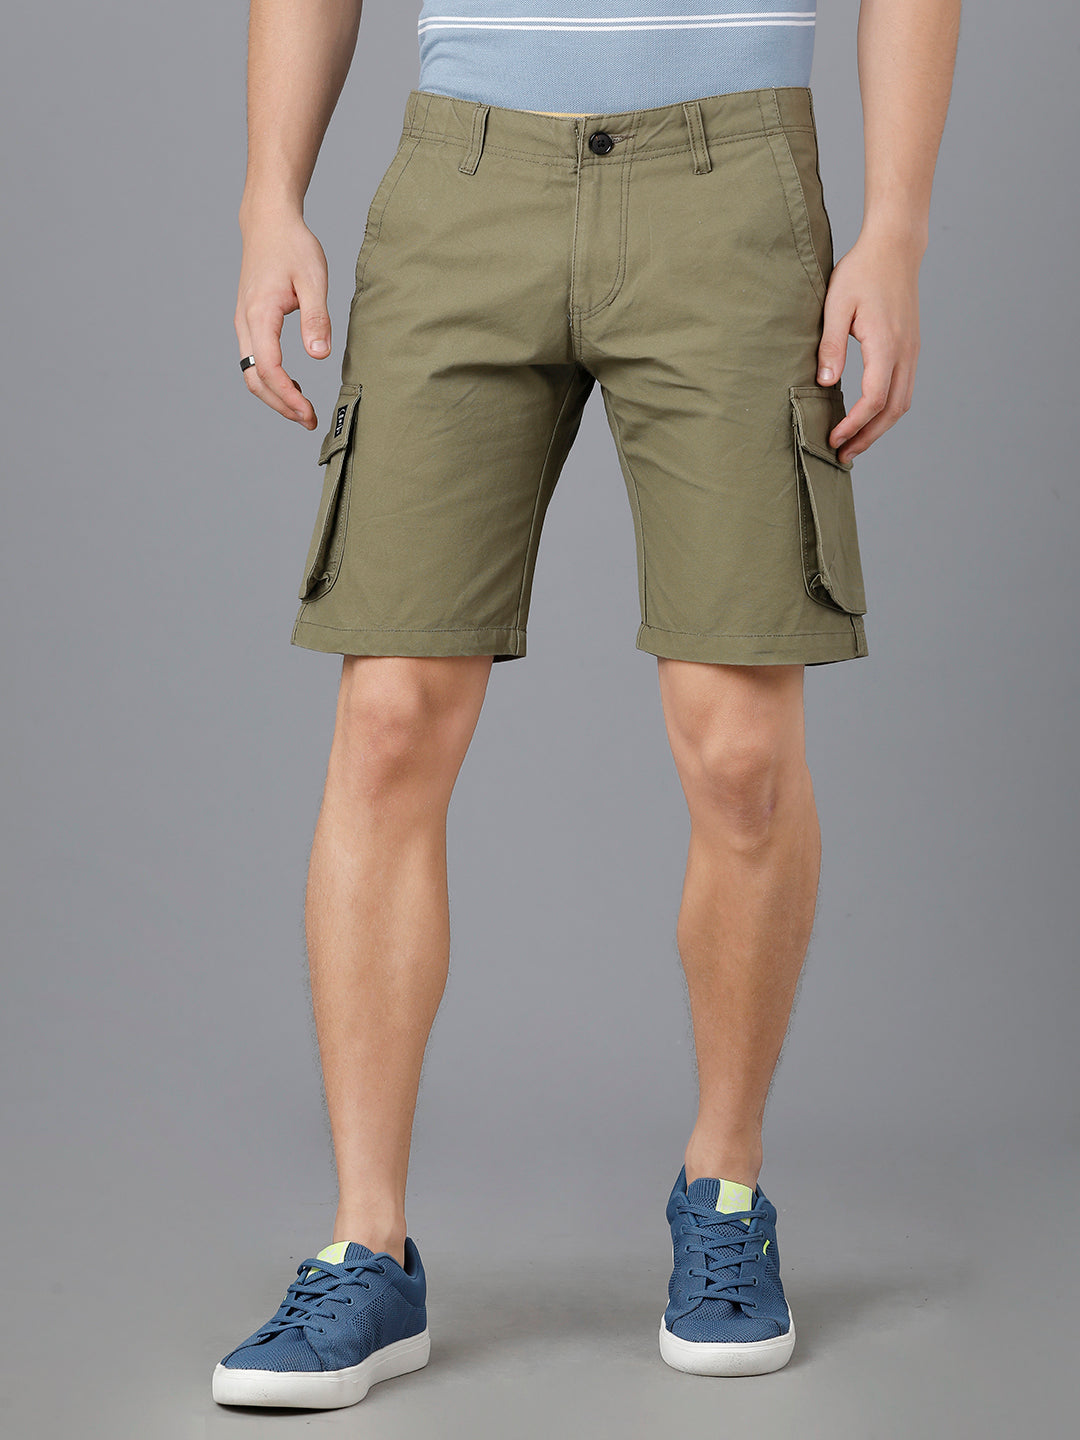 Olive Green Cargo Shorts